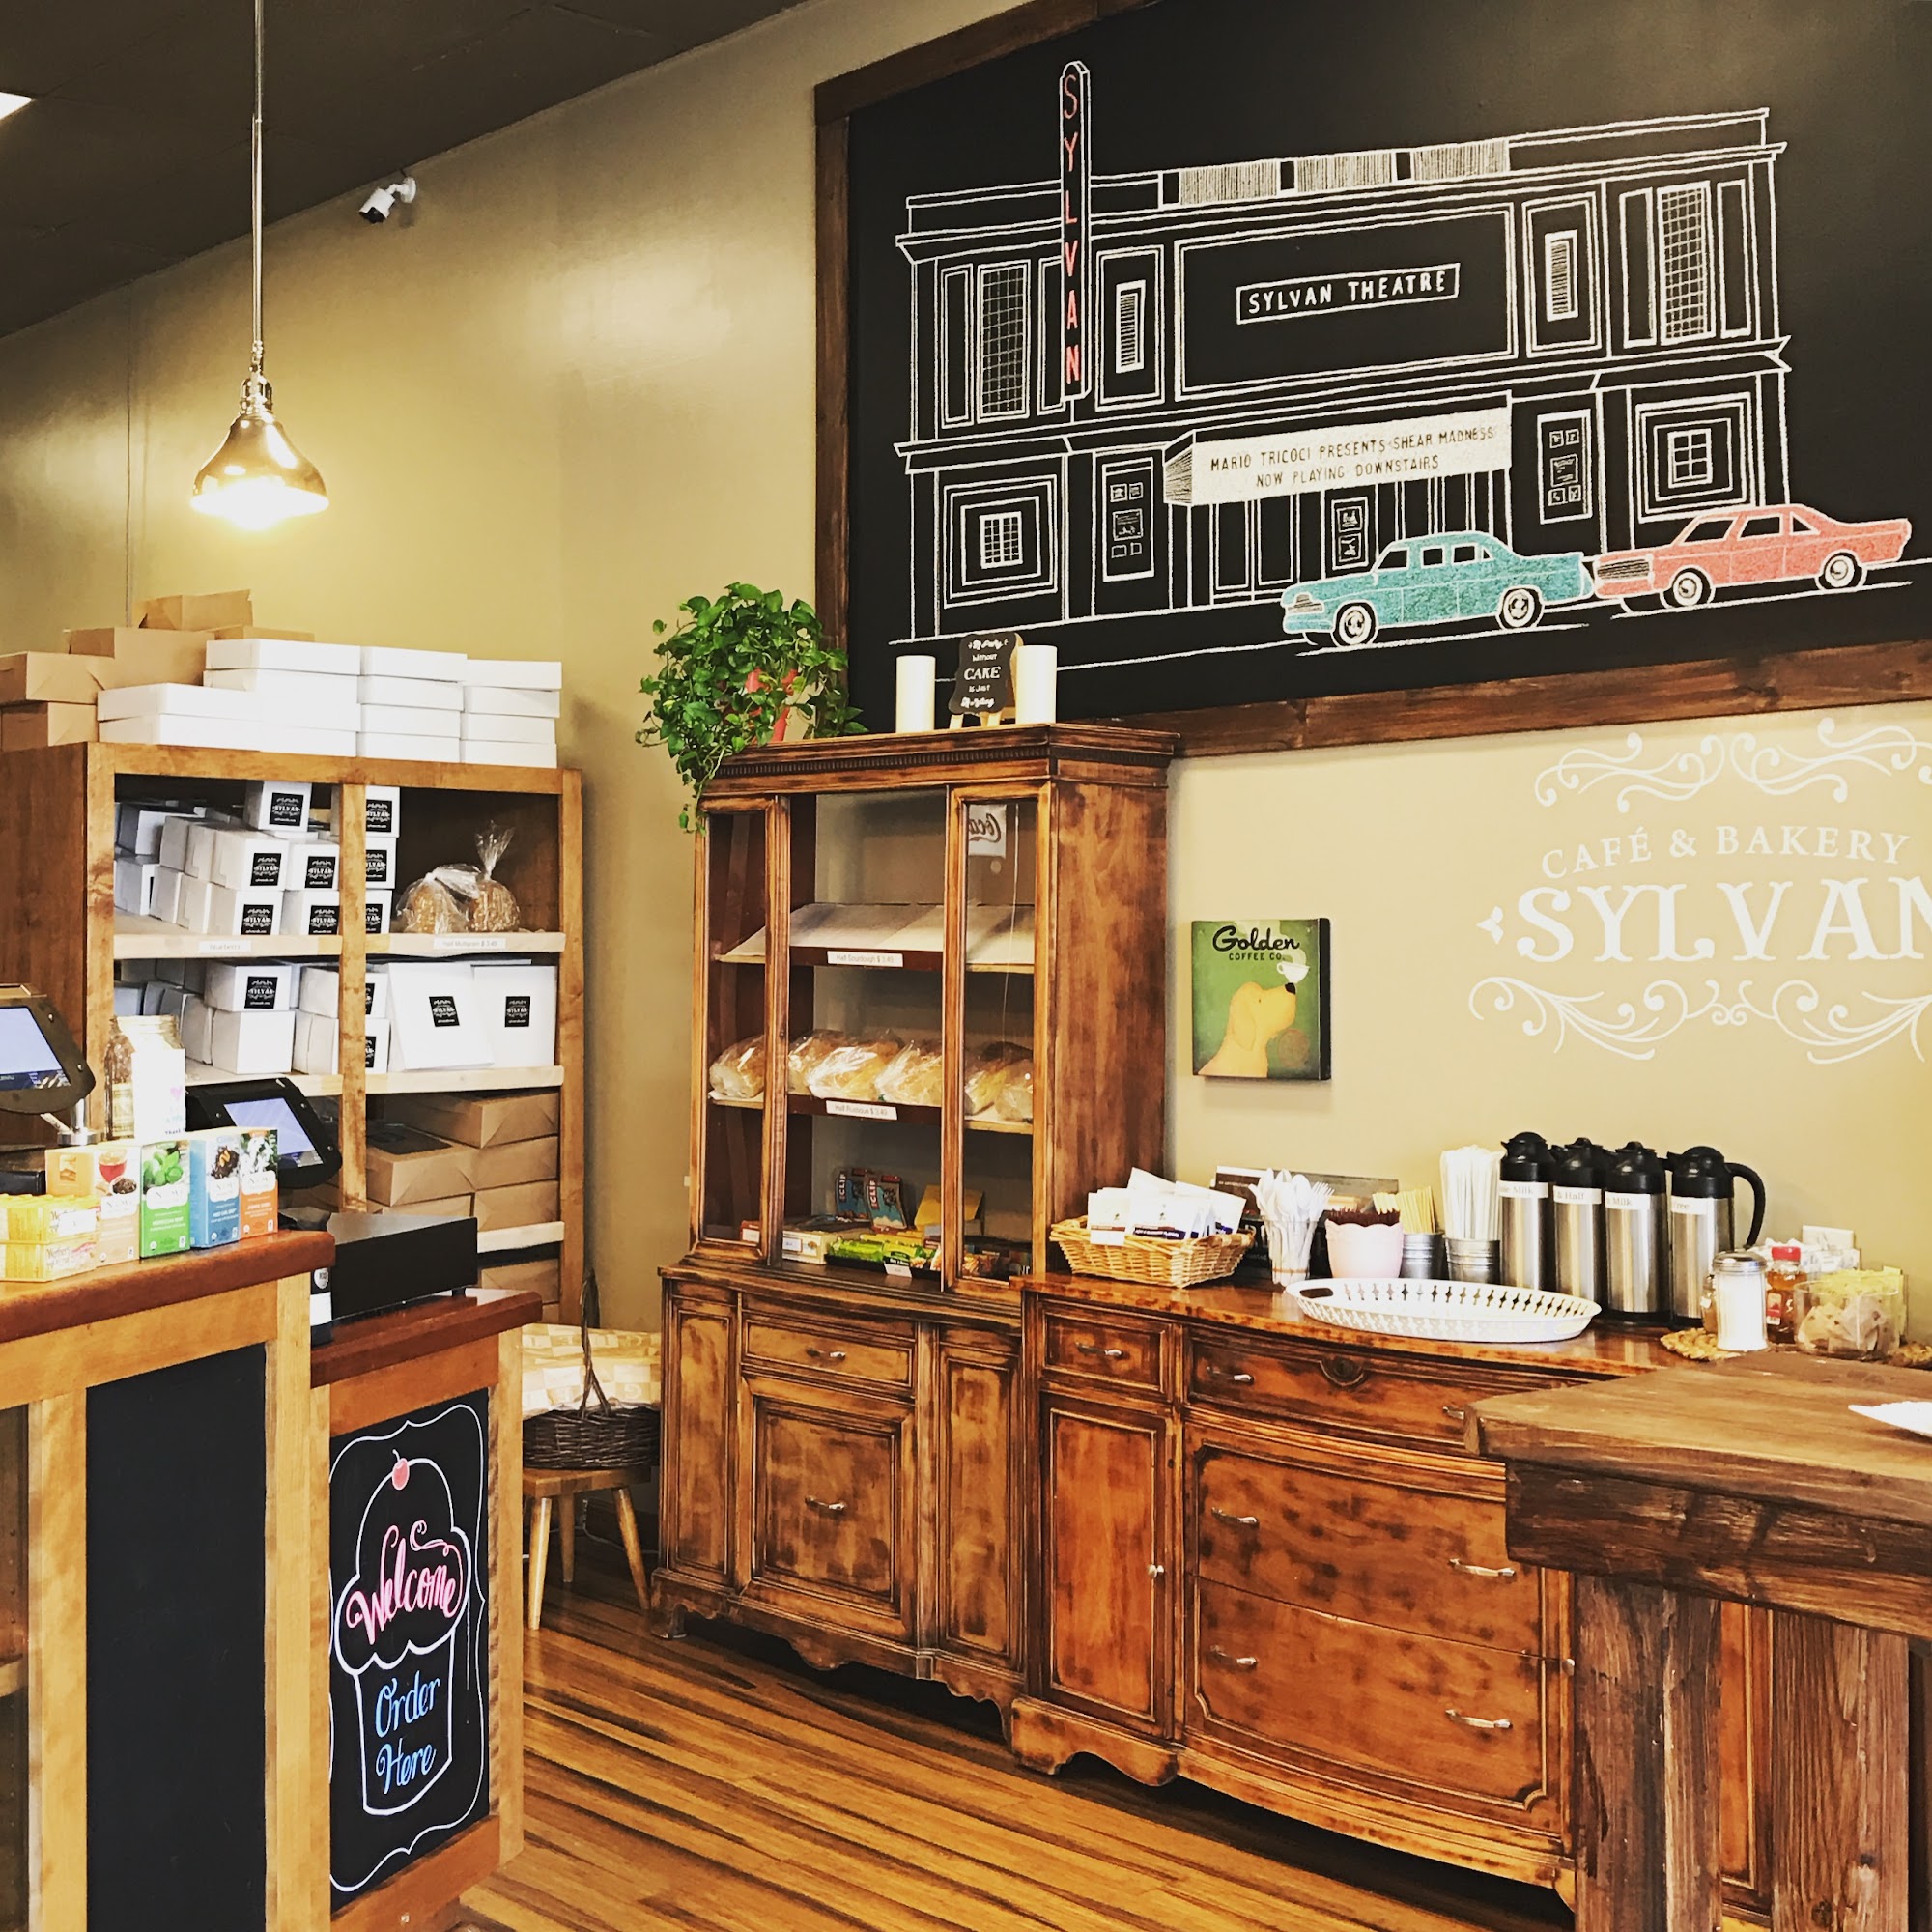 Sylvan Cafe